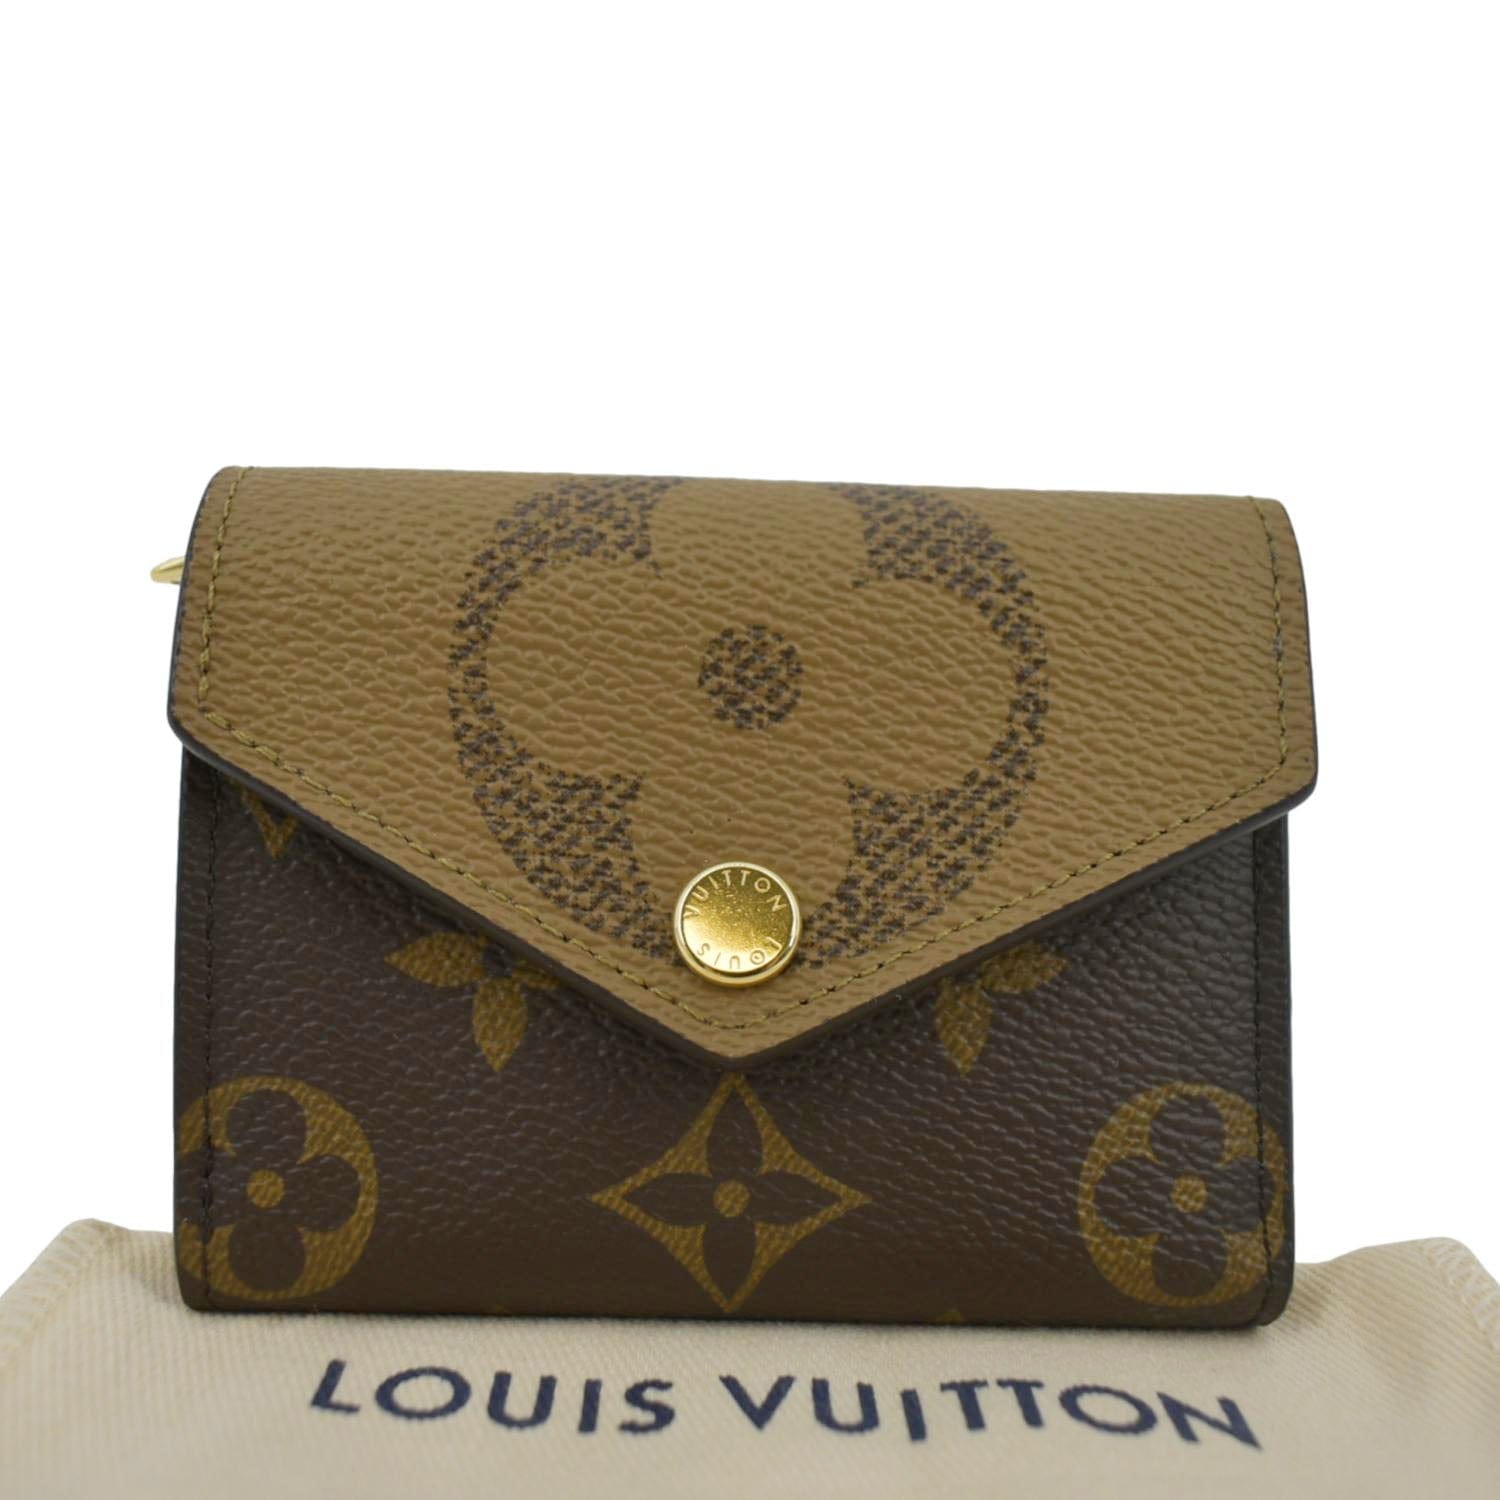 Louis Vuitton Zoe Wallet Vs Victorine